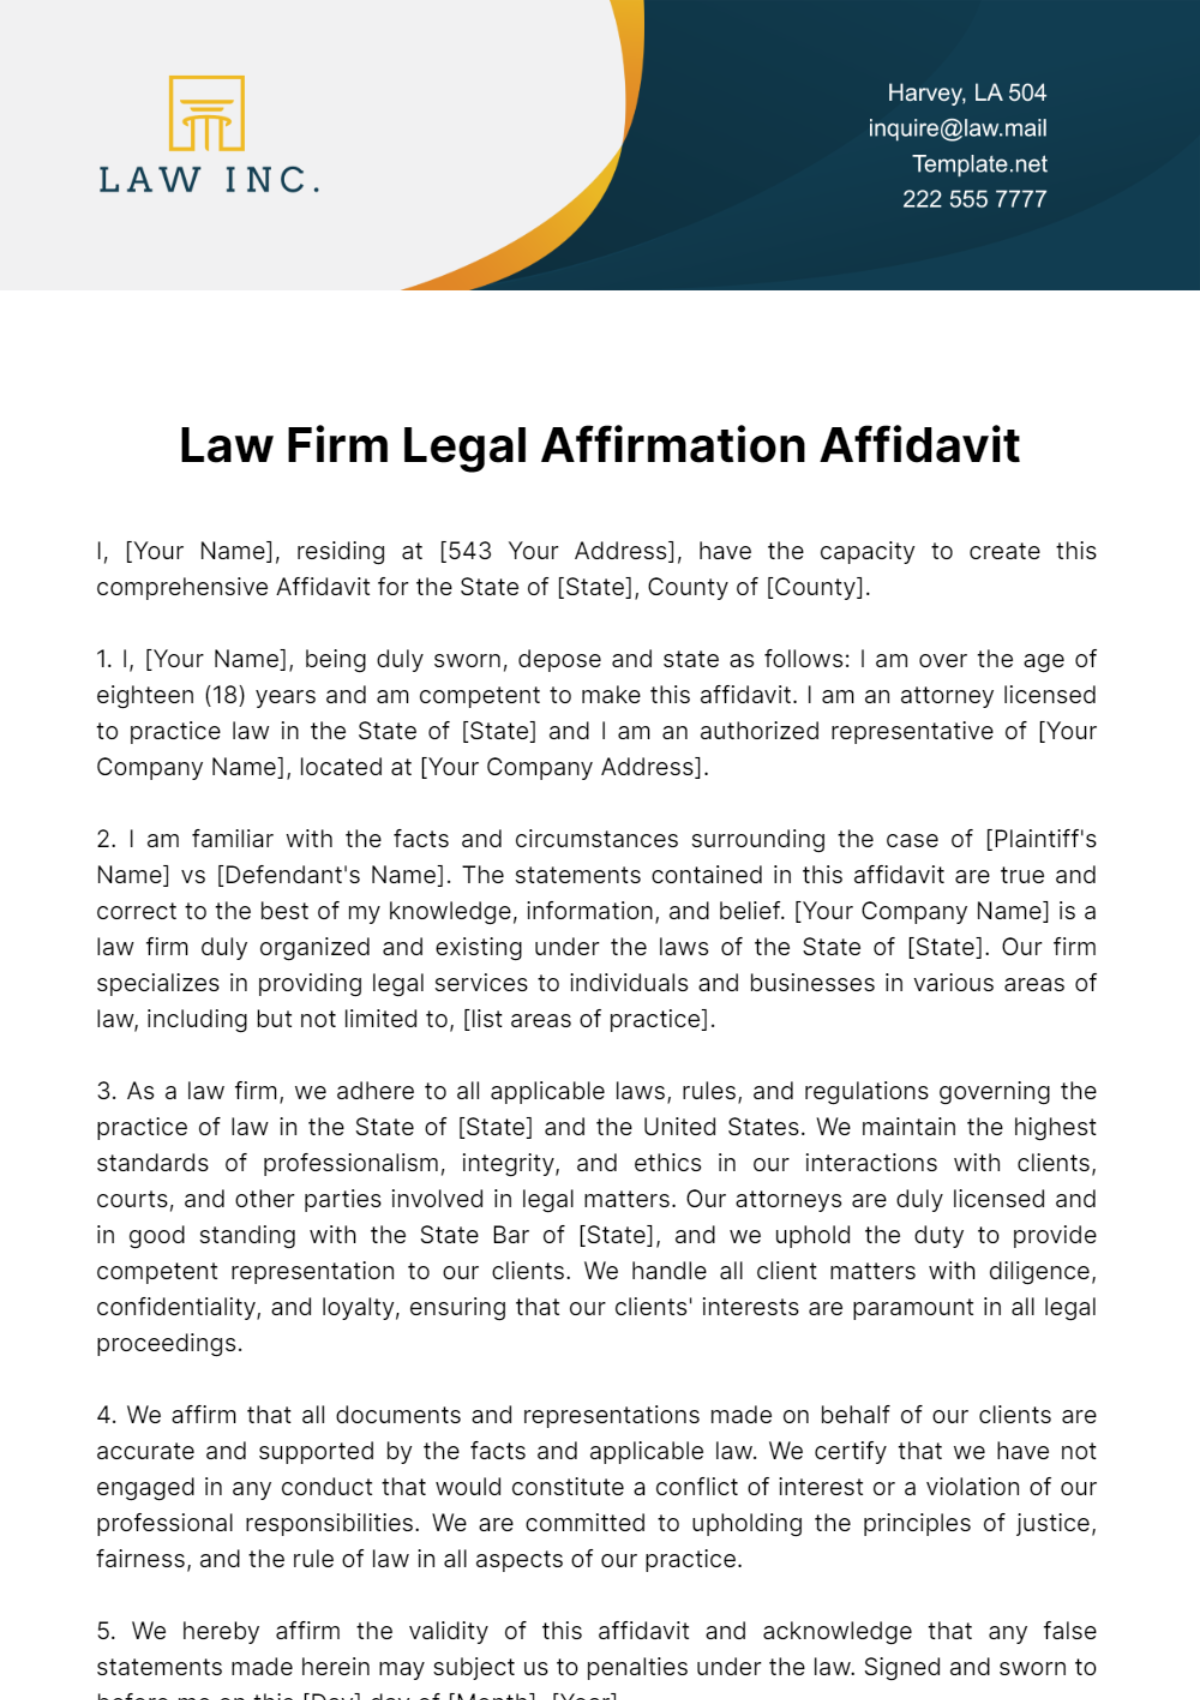 Law Firm Legal Affirmation Affidavit Template